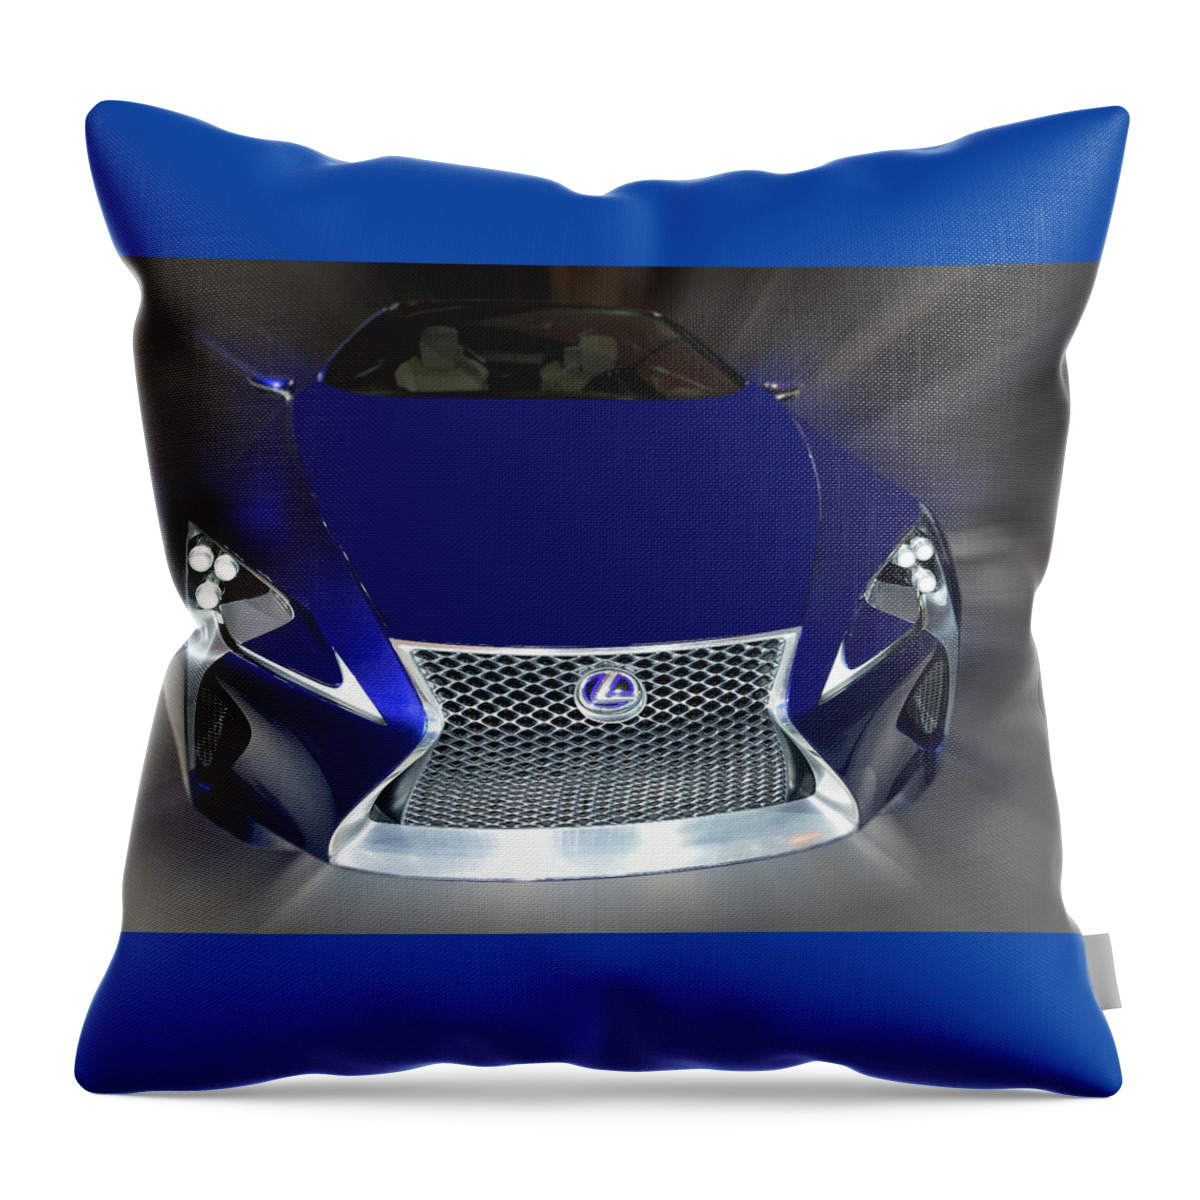 Lexus Lf-lc Concept Throw Pillow featuring the photograph Lexus LF-LC concept 2014 by Dragan Kudjerski